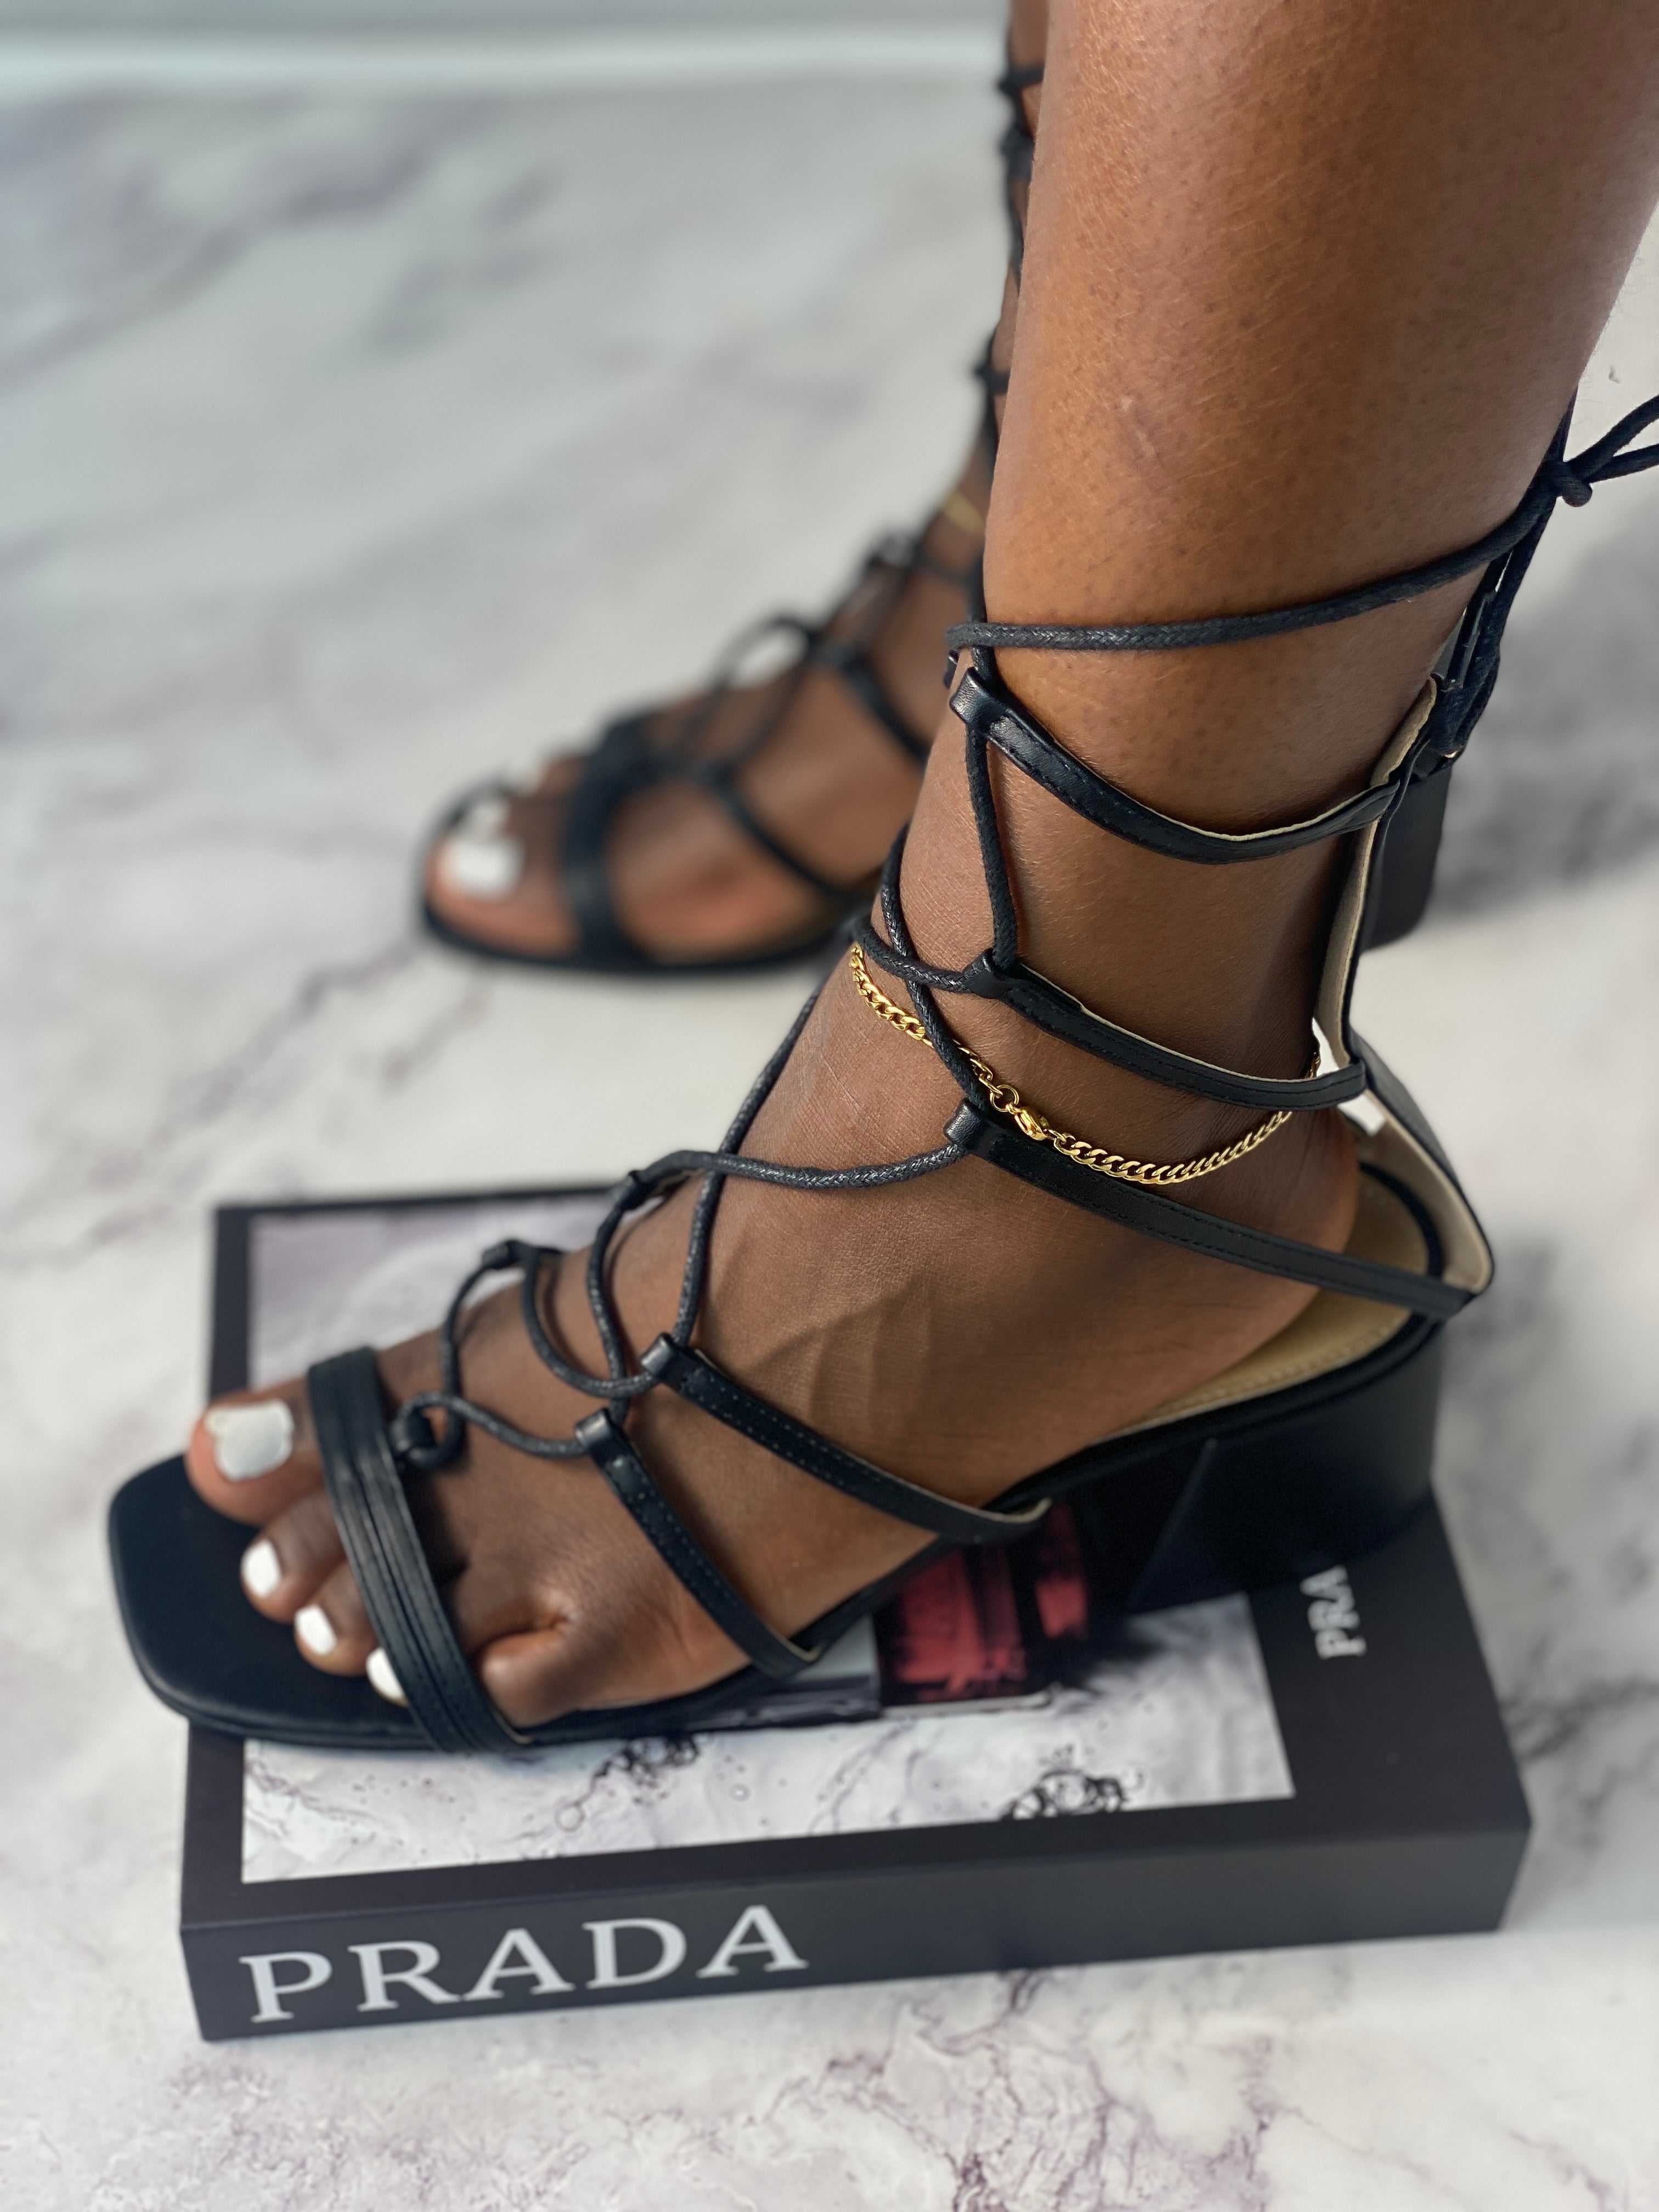 Brash Women's Luster Black Platform Pump Heel Peep Toe Smooth Faux Leather  Shoe | eBay